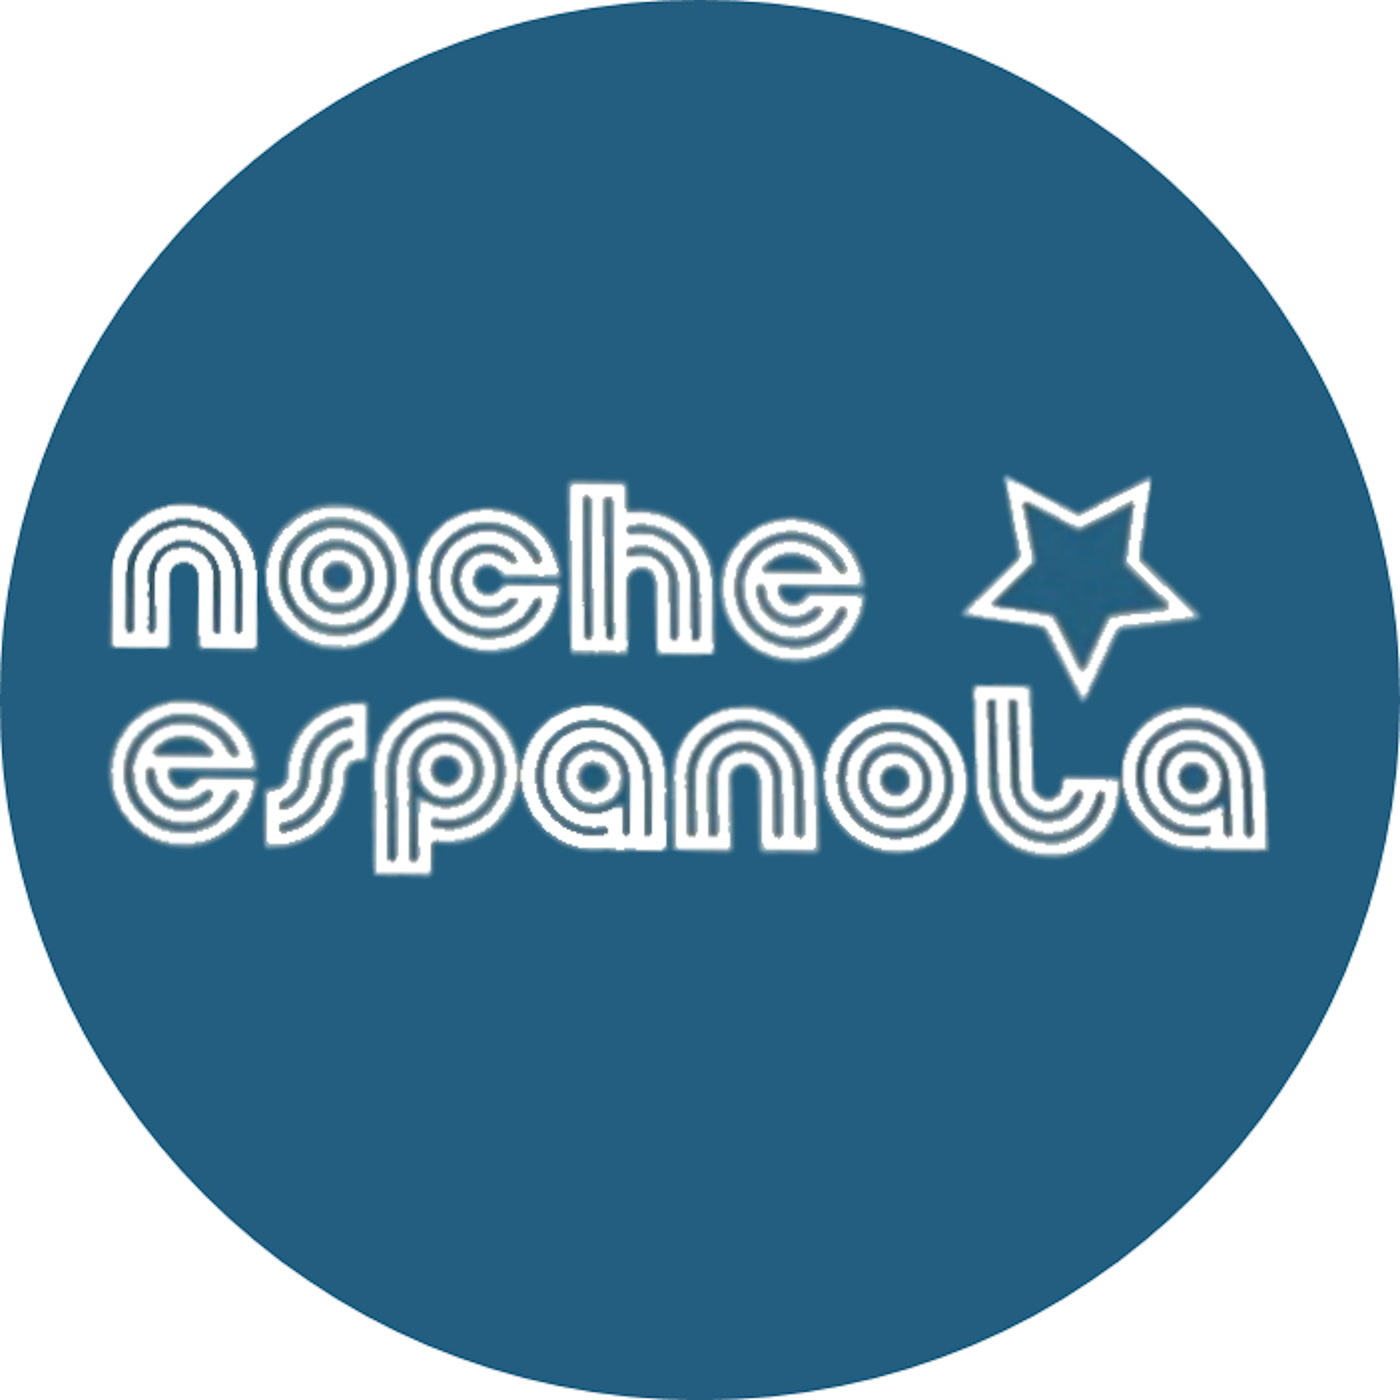 Noche Espanola - Noche Española / Highwood Recordings